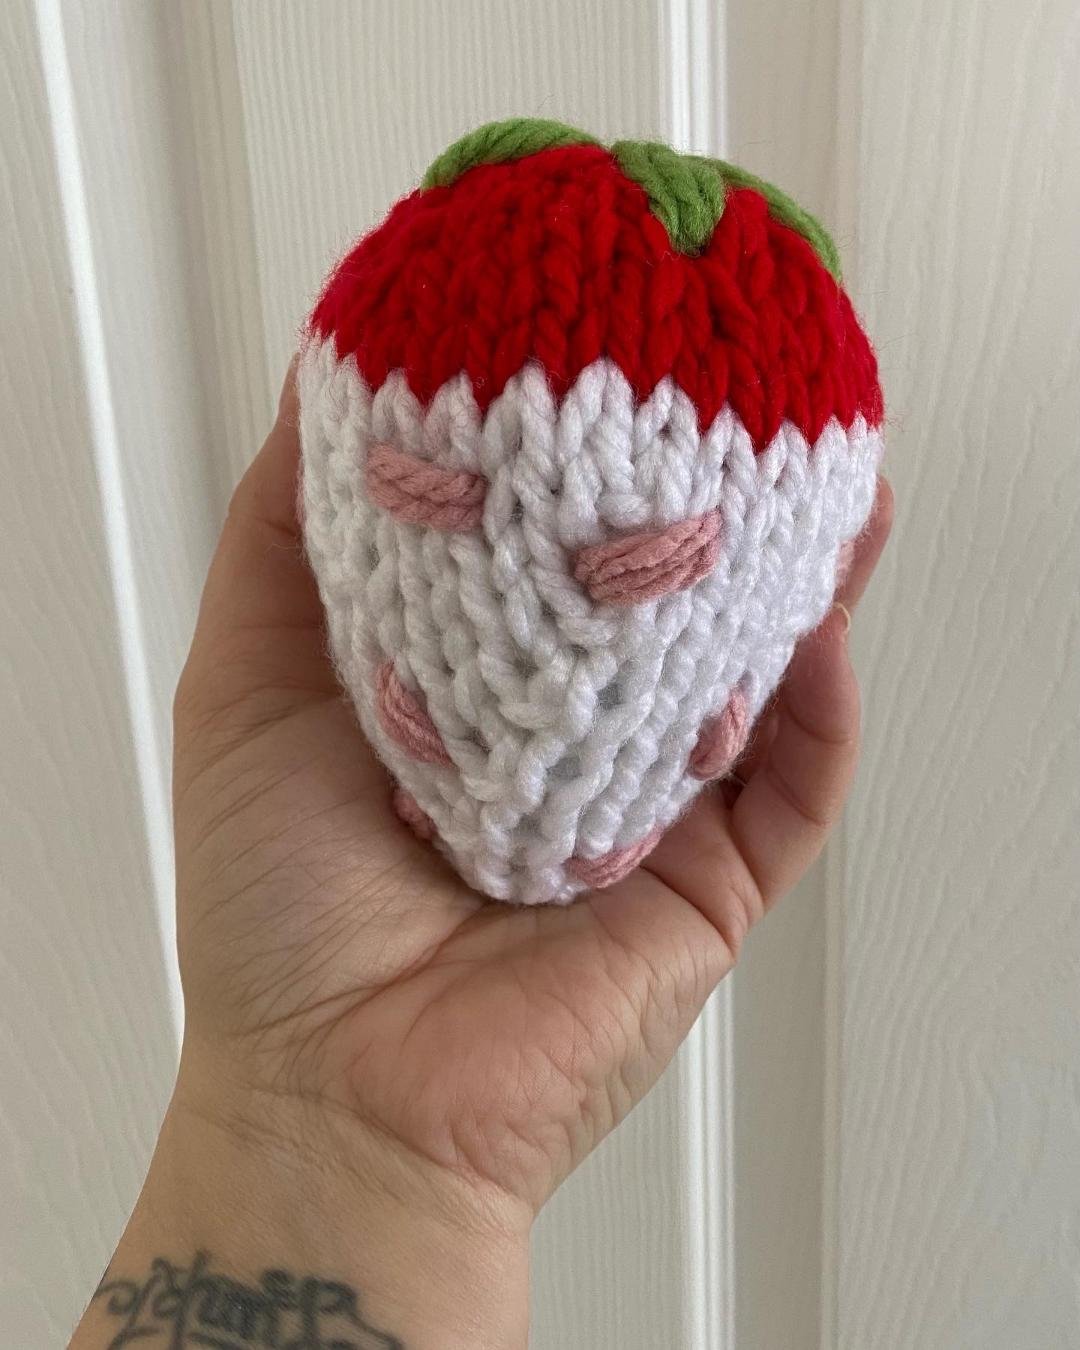 Giant Strawberry 1.jpg